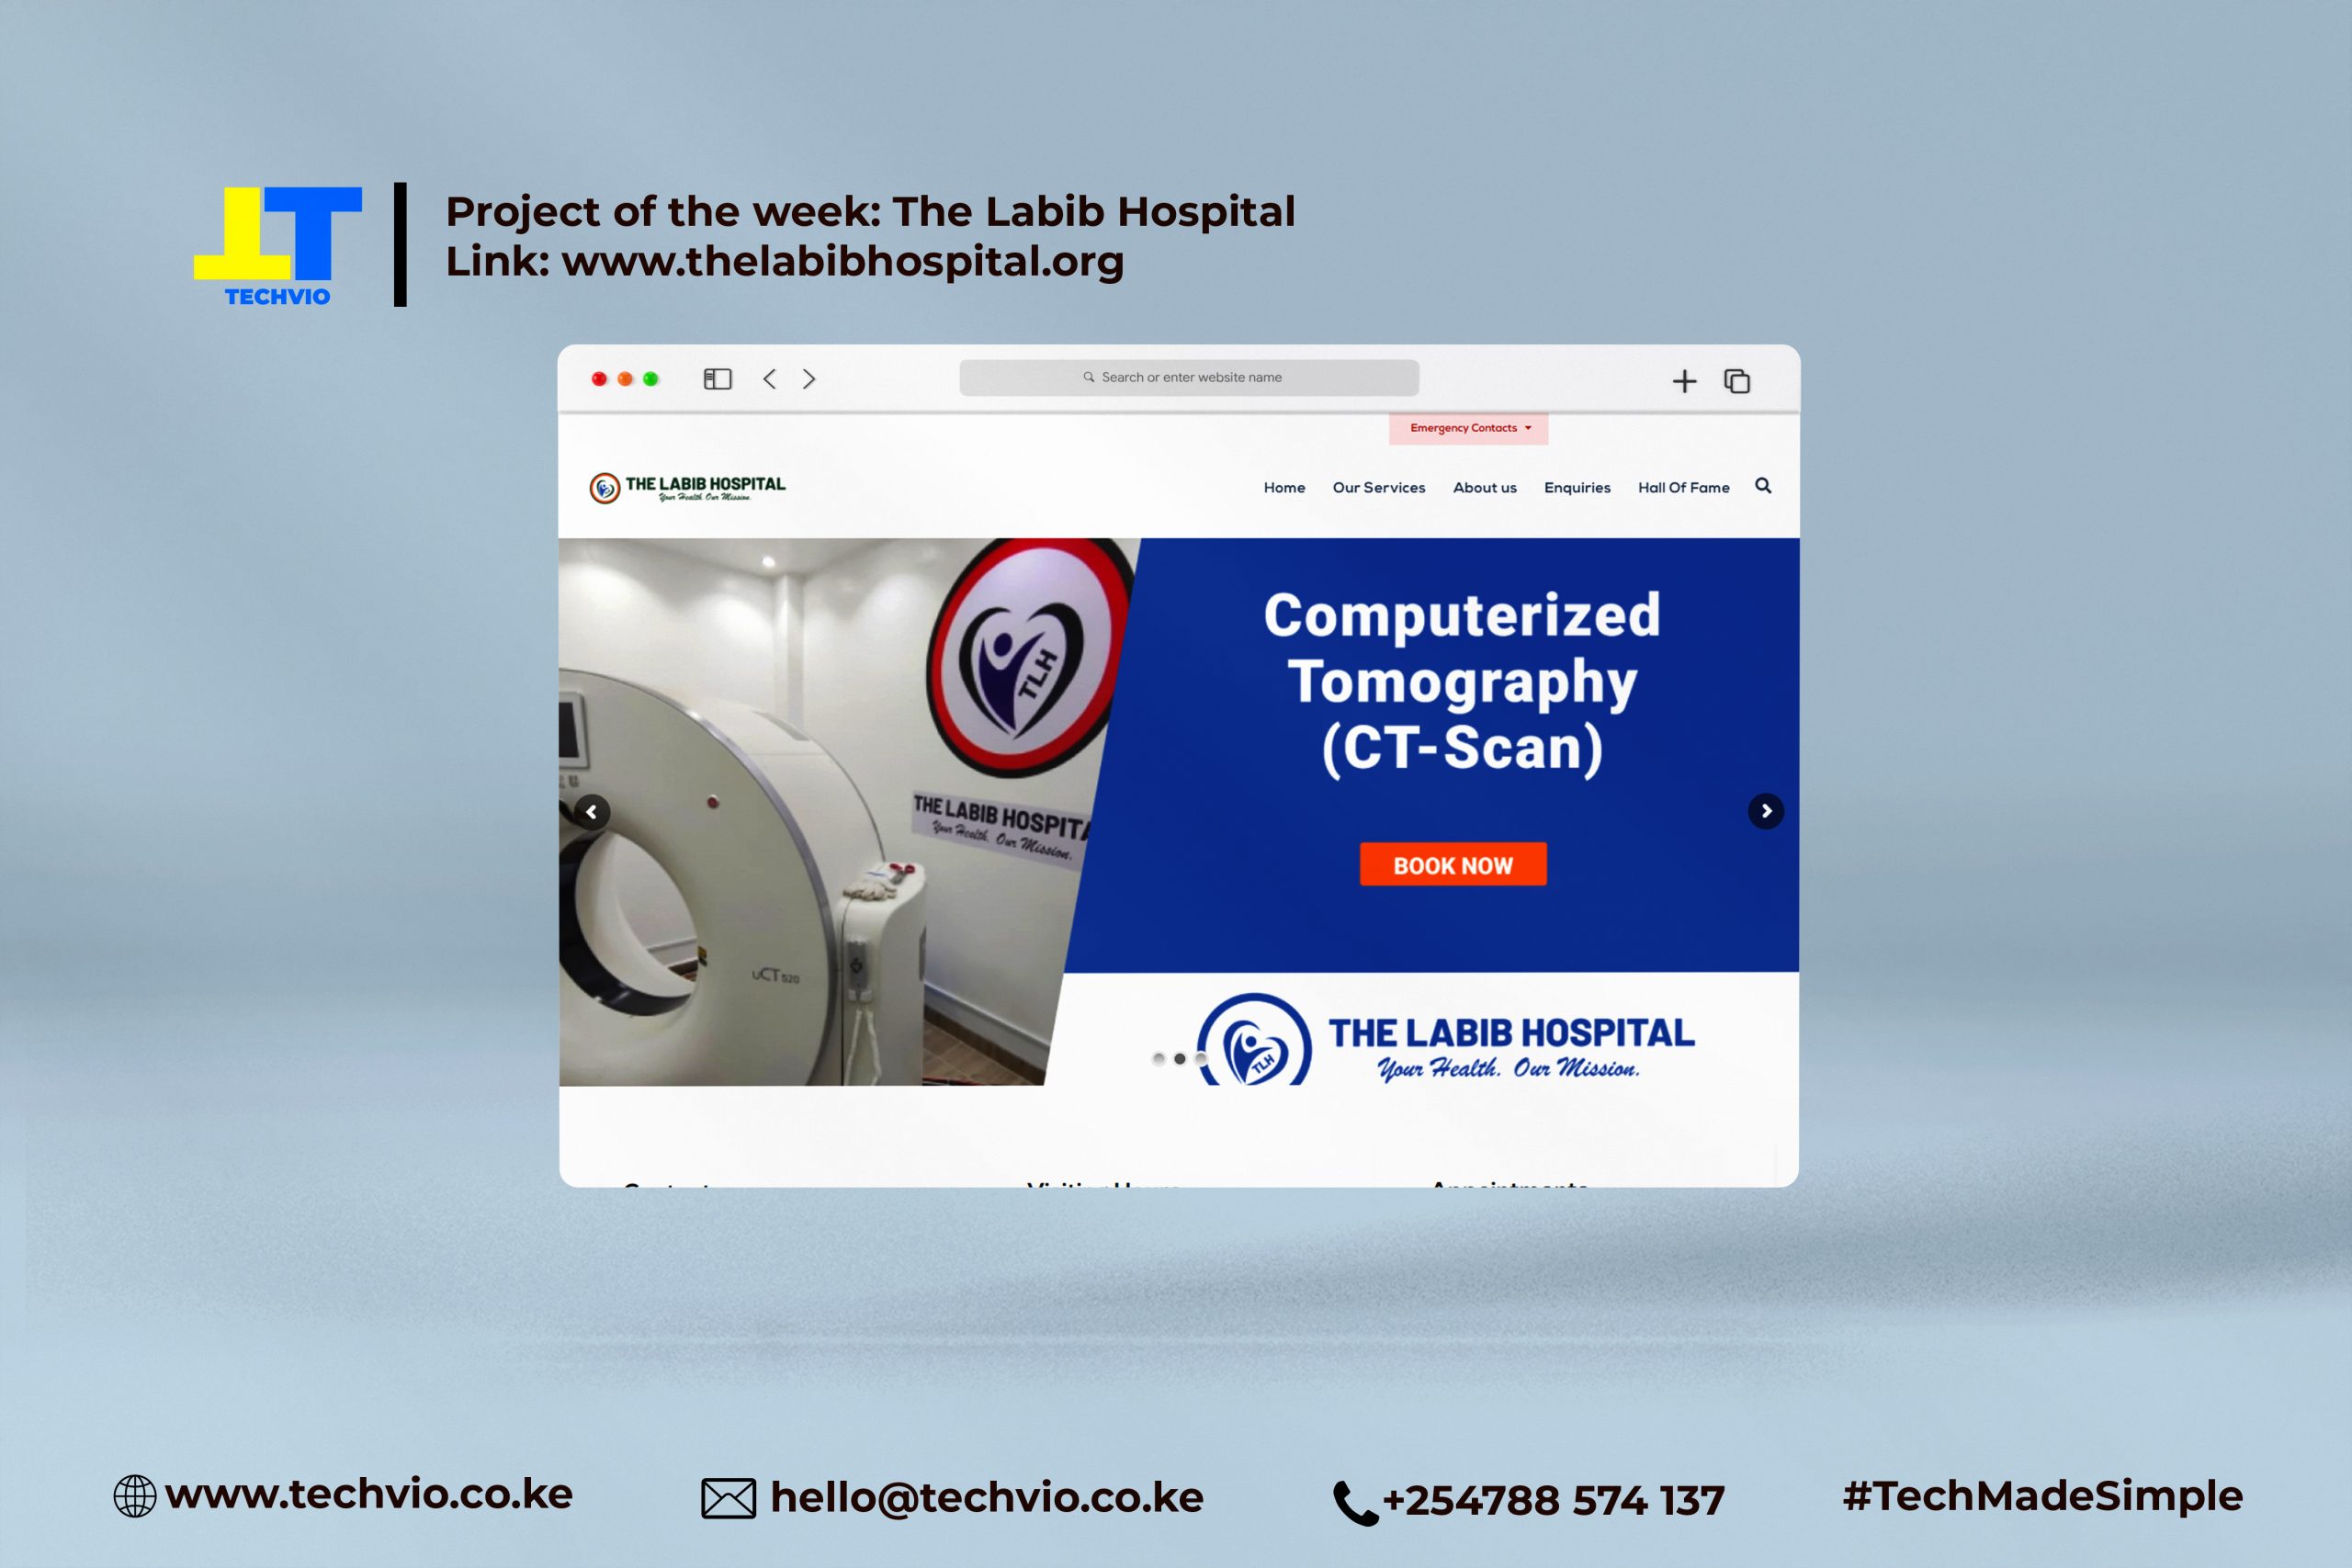 The Labib Hospital Website